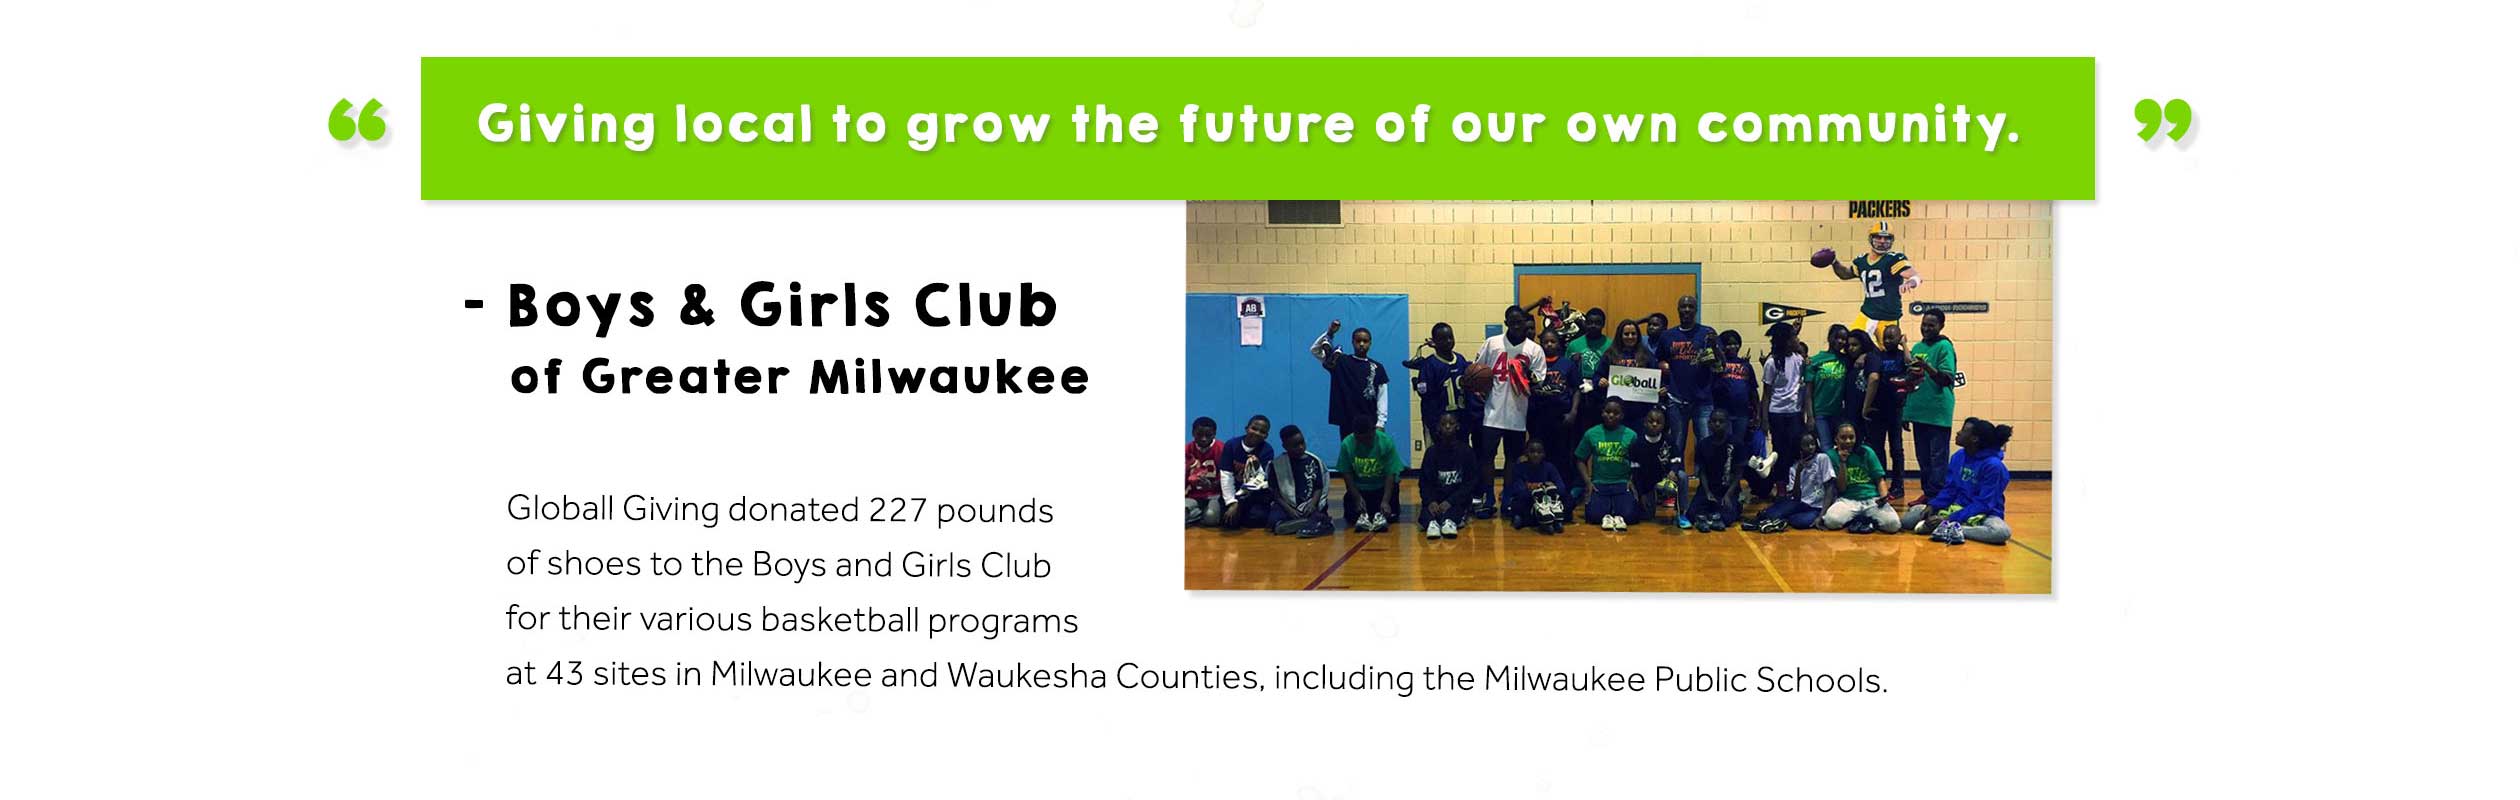 Boys & Girls Club of Greater Milwaukee